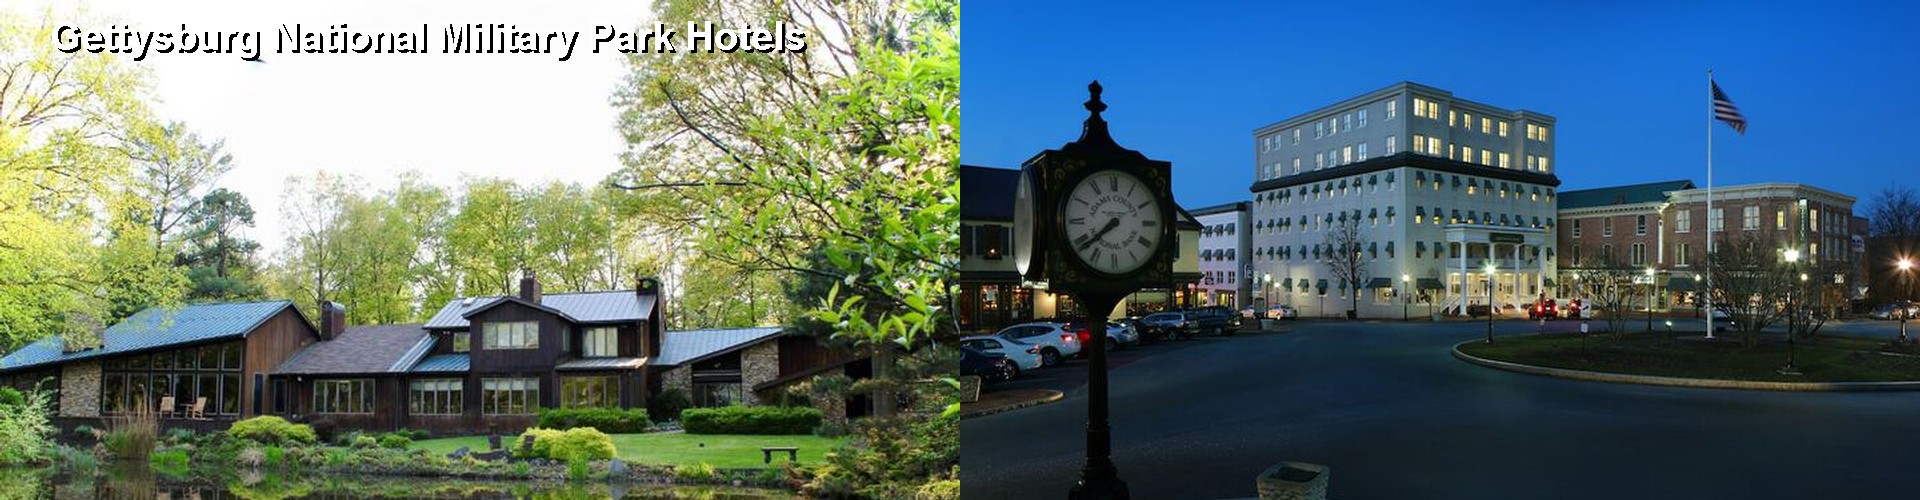 5 Best Hotels near Gettysburg National Military Park